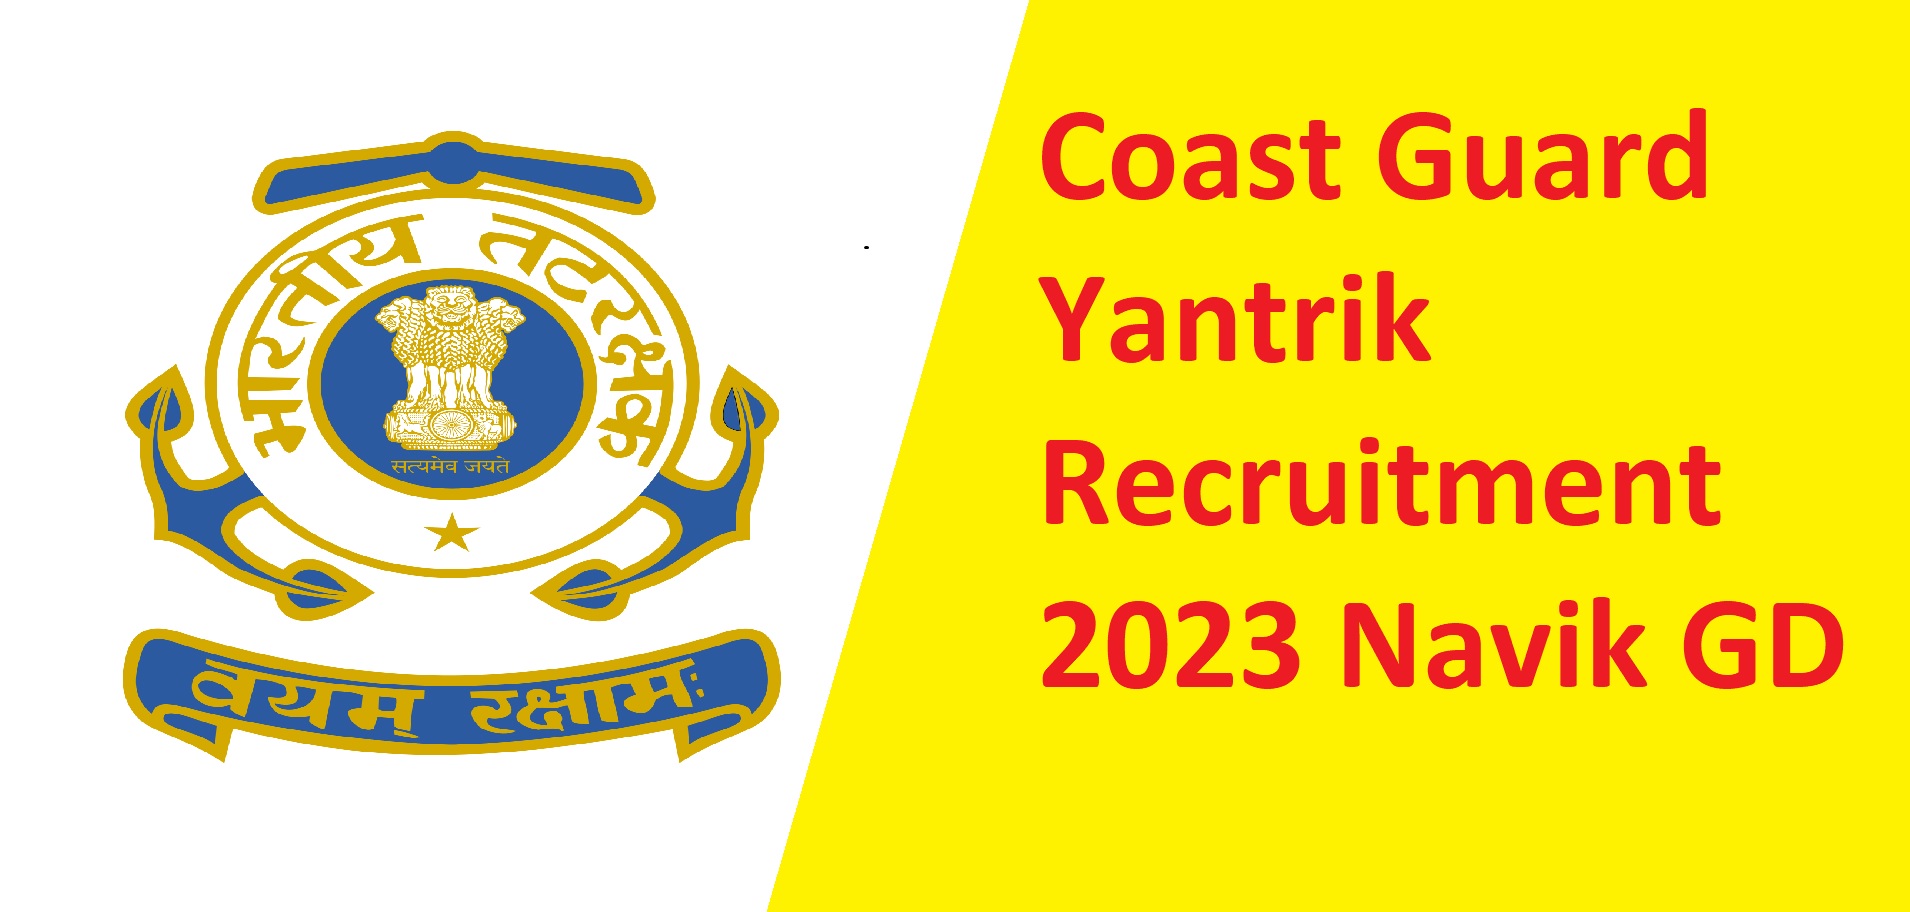 Coast Guard Yantrik Recruitment 2023 Navik GD